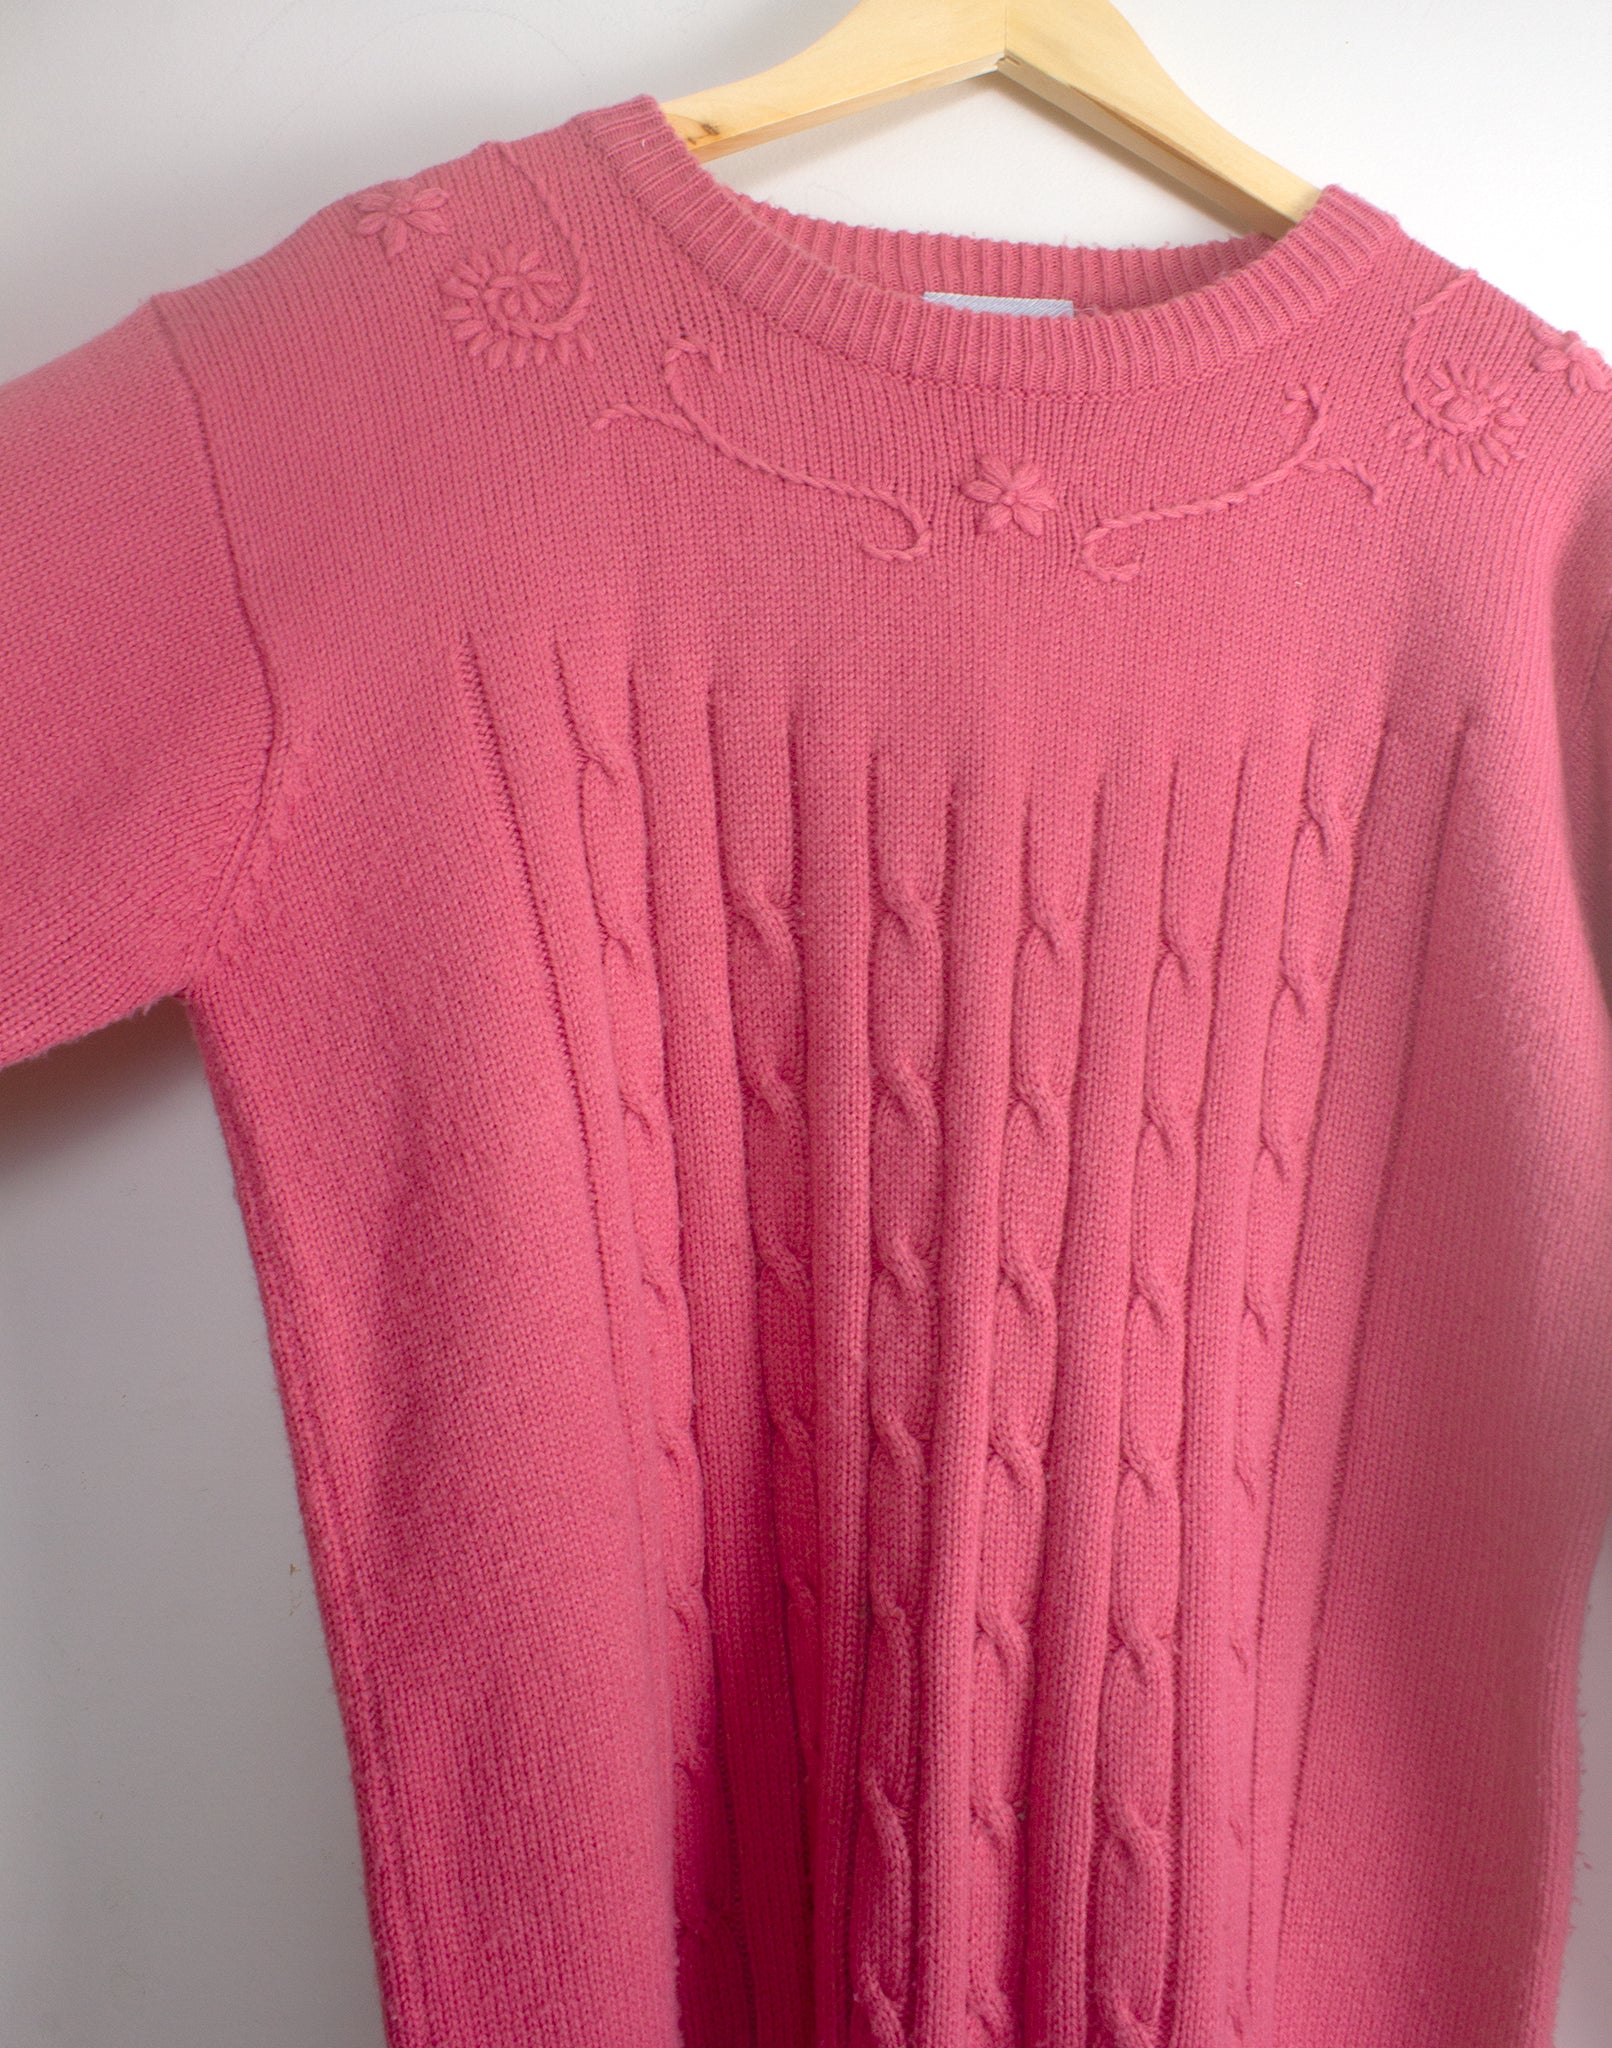 Vintage 80's Katies Blush Pink Jumper - Size S/M